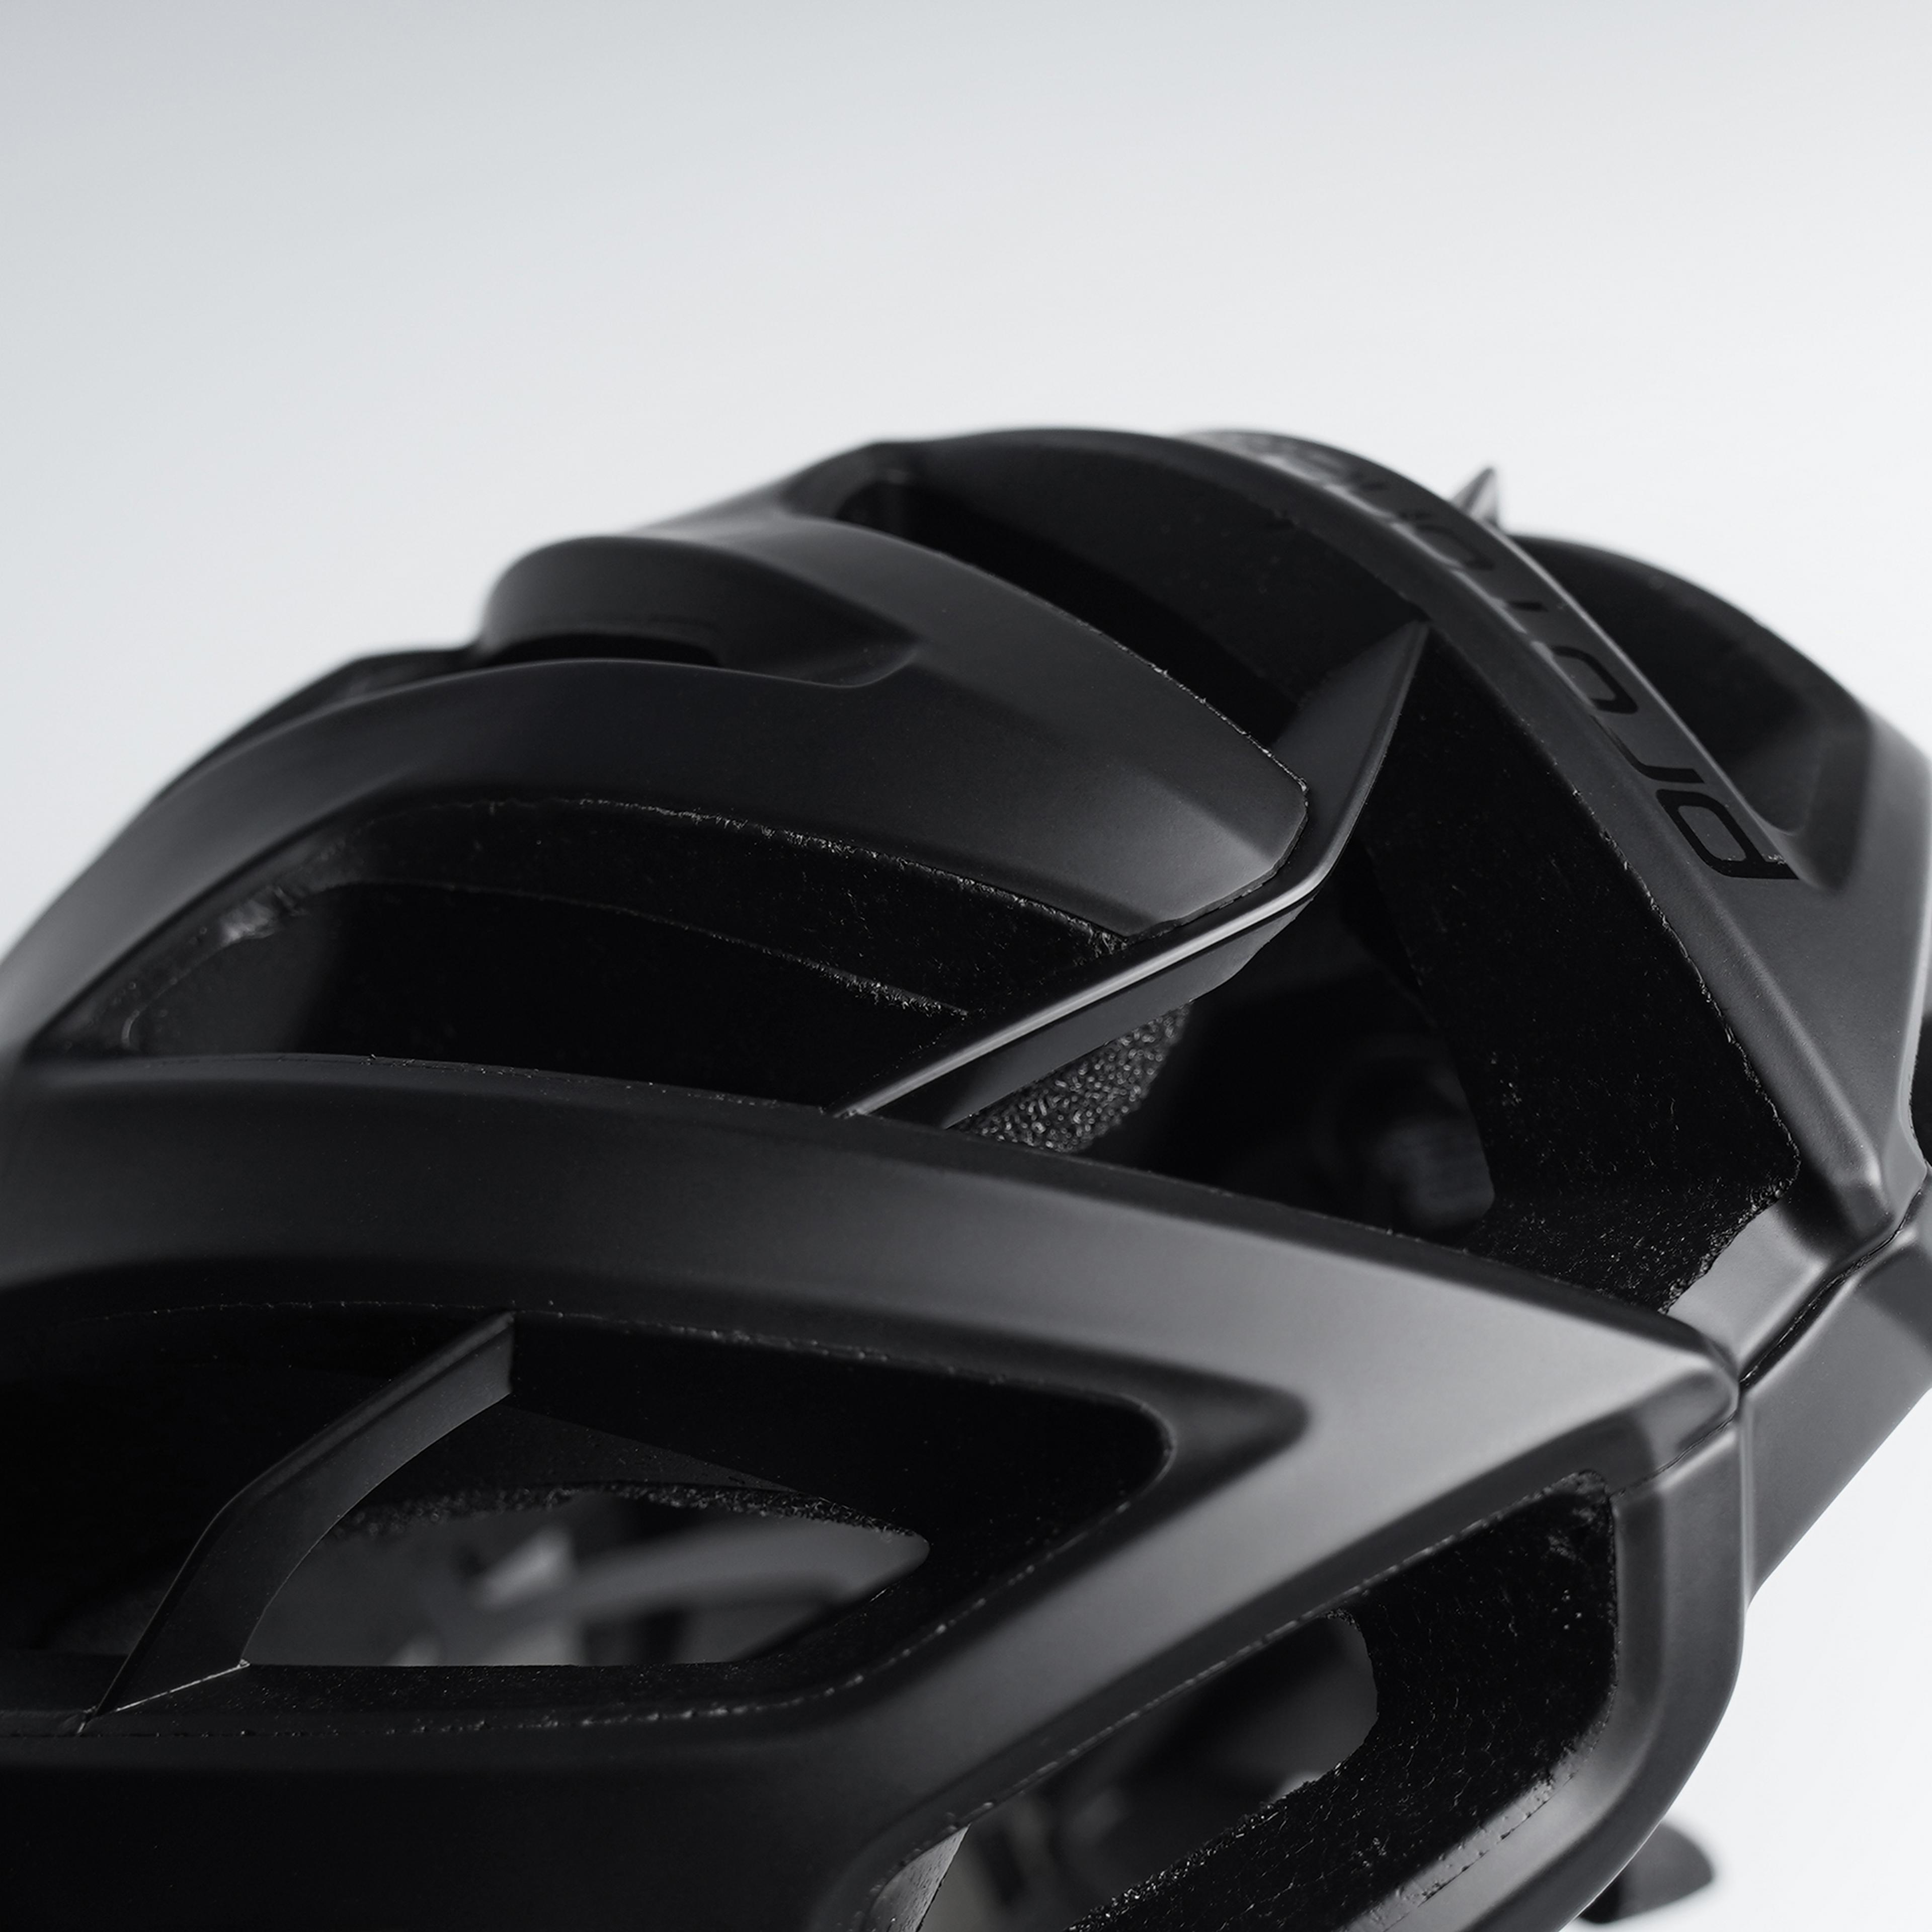 Kask Protone Road Cycling Helmet (Matte Finish-WG11)